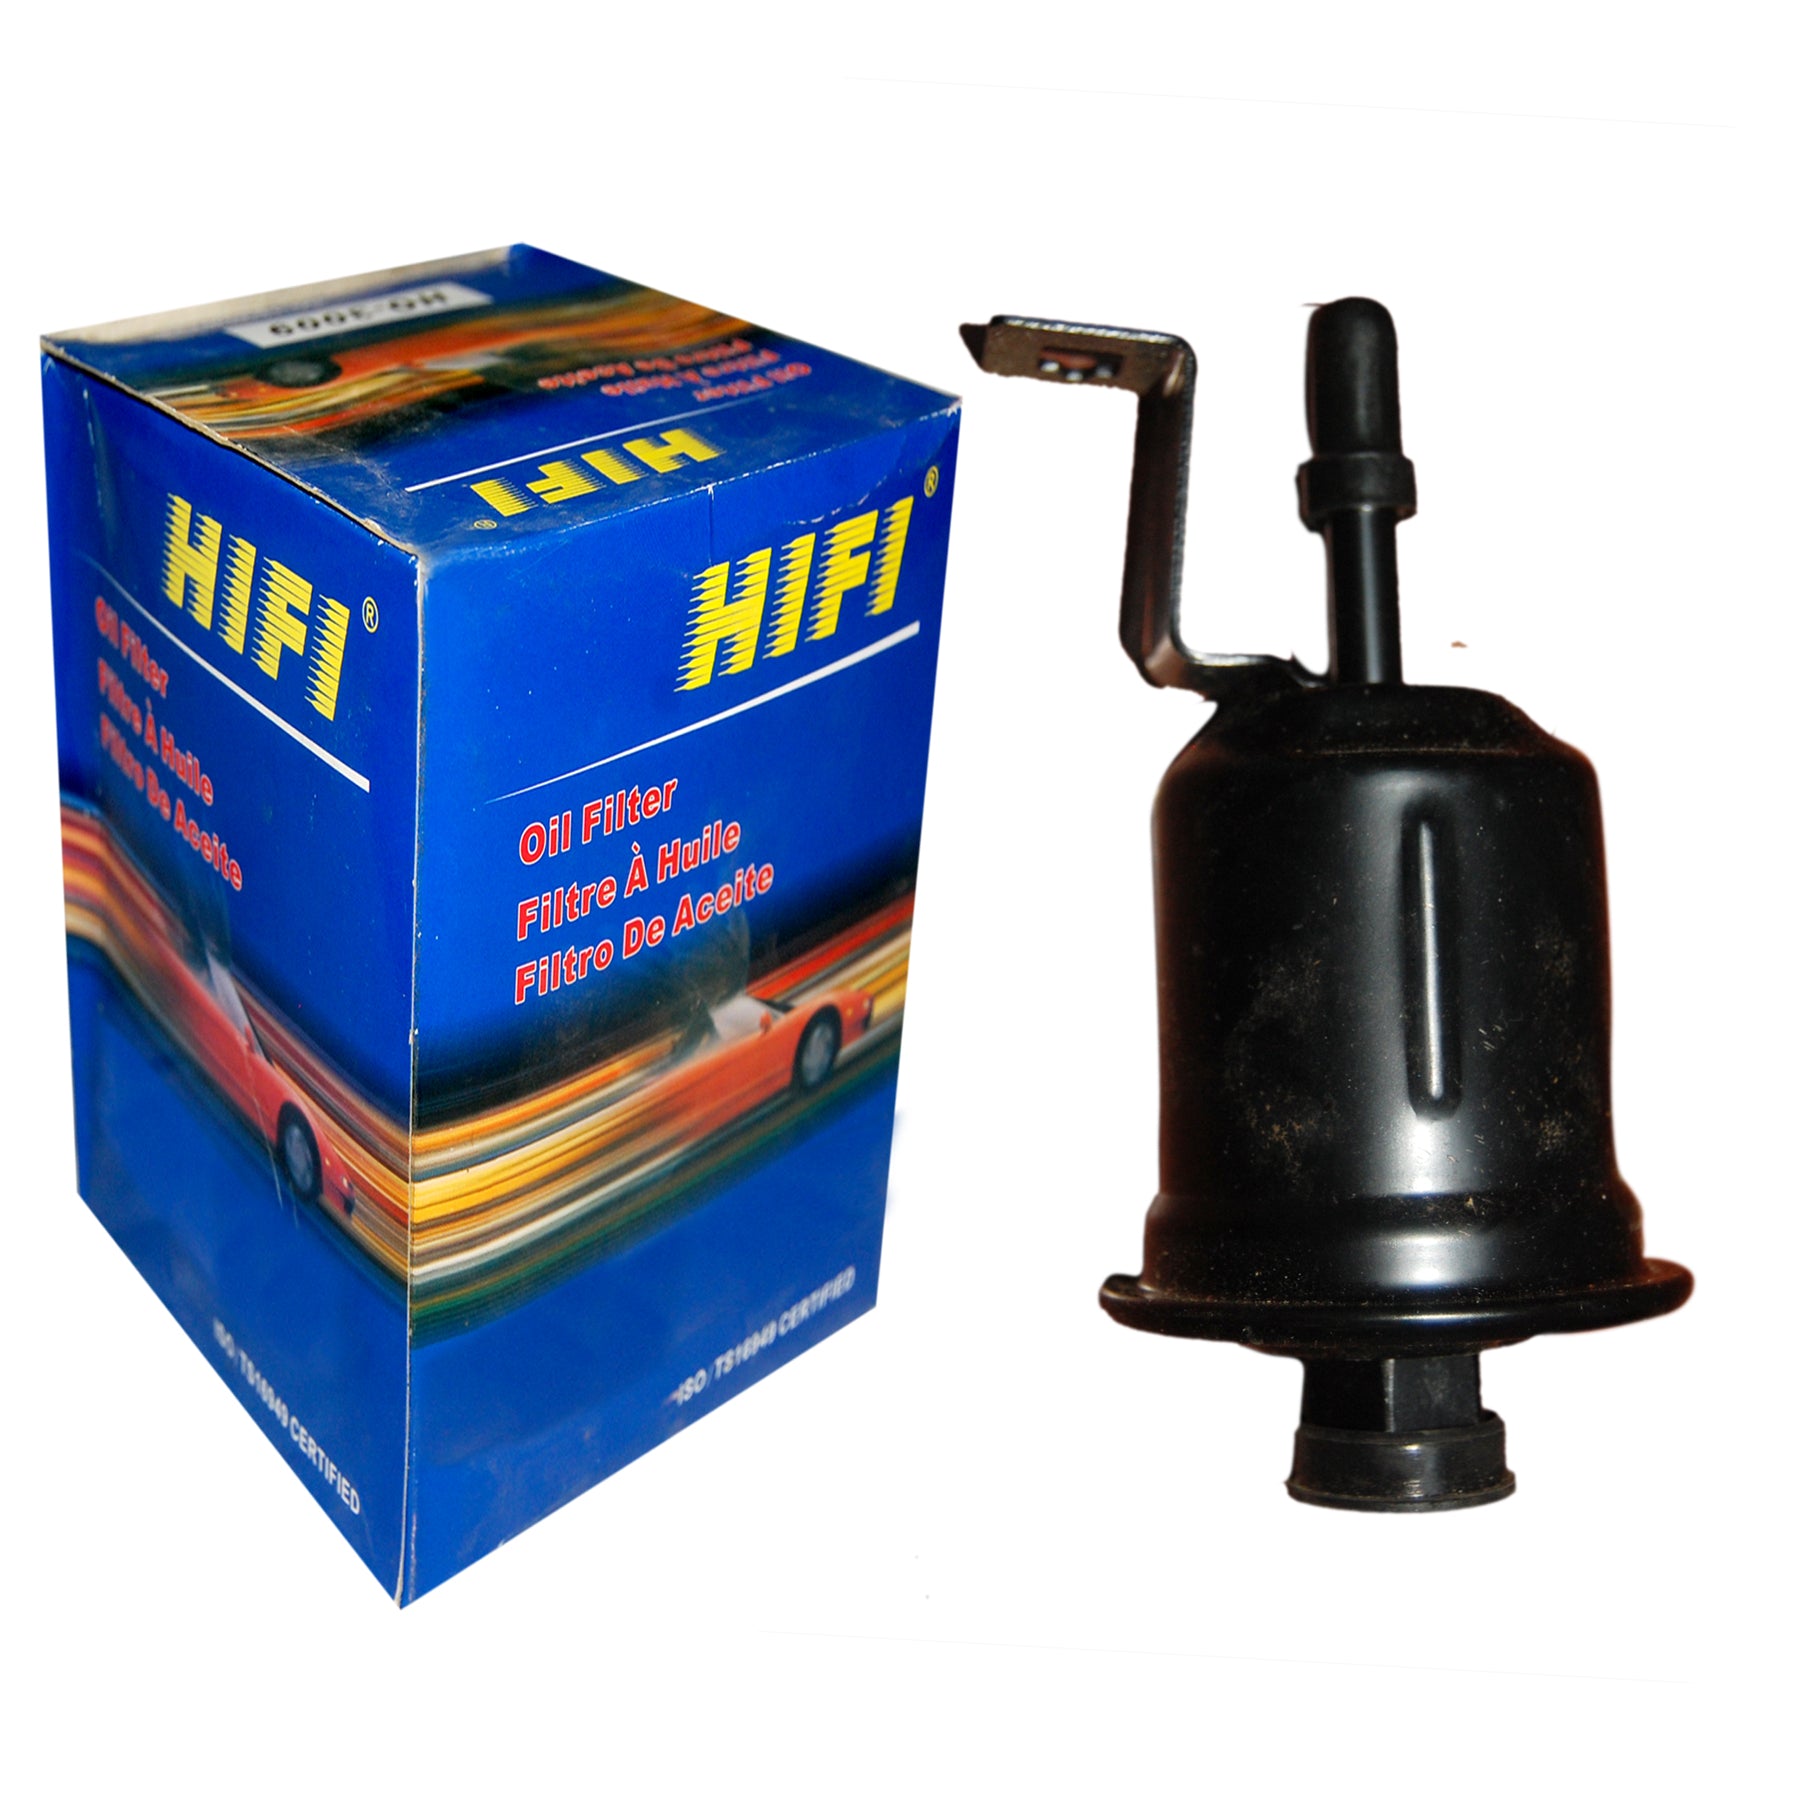 Fuel Filter, HIFI, 23300-74300, HF-1051 (001151) - Win Store